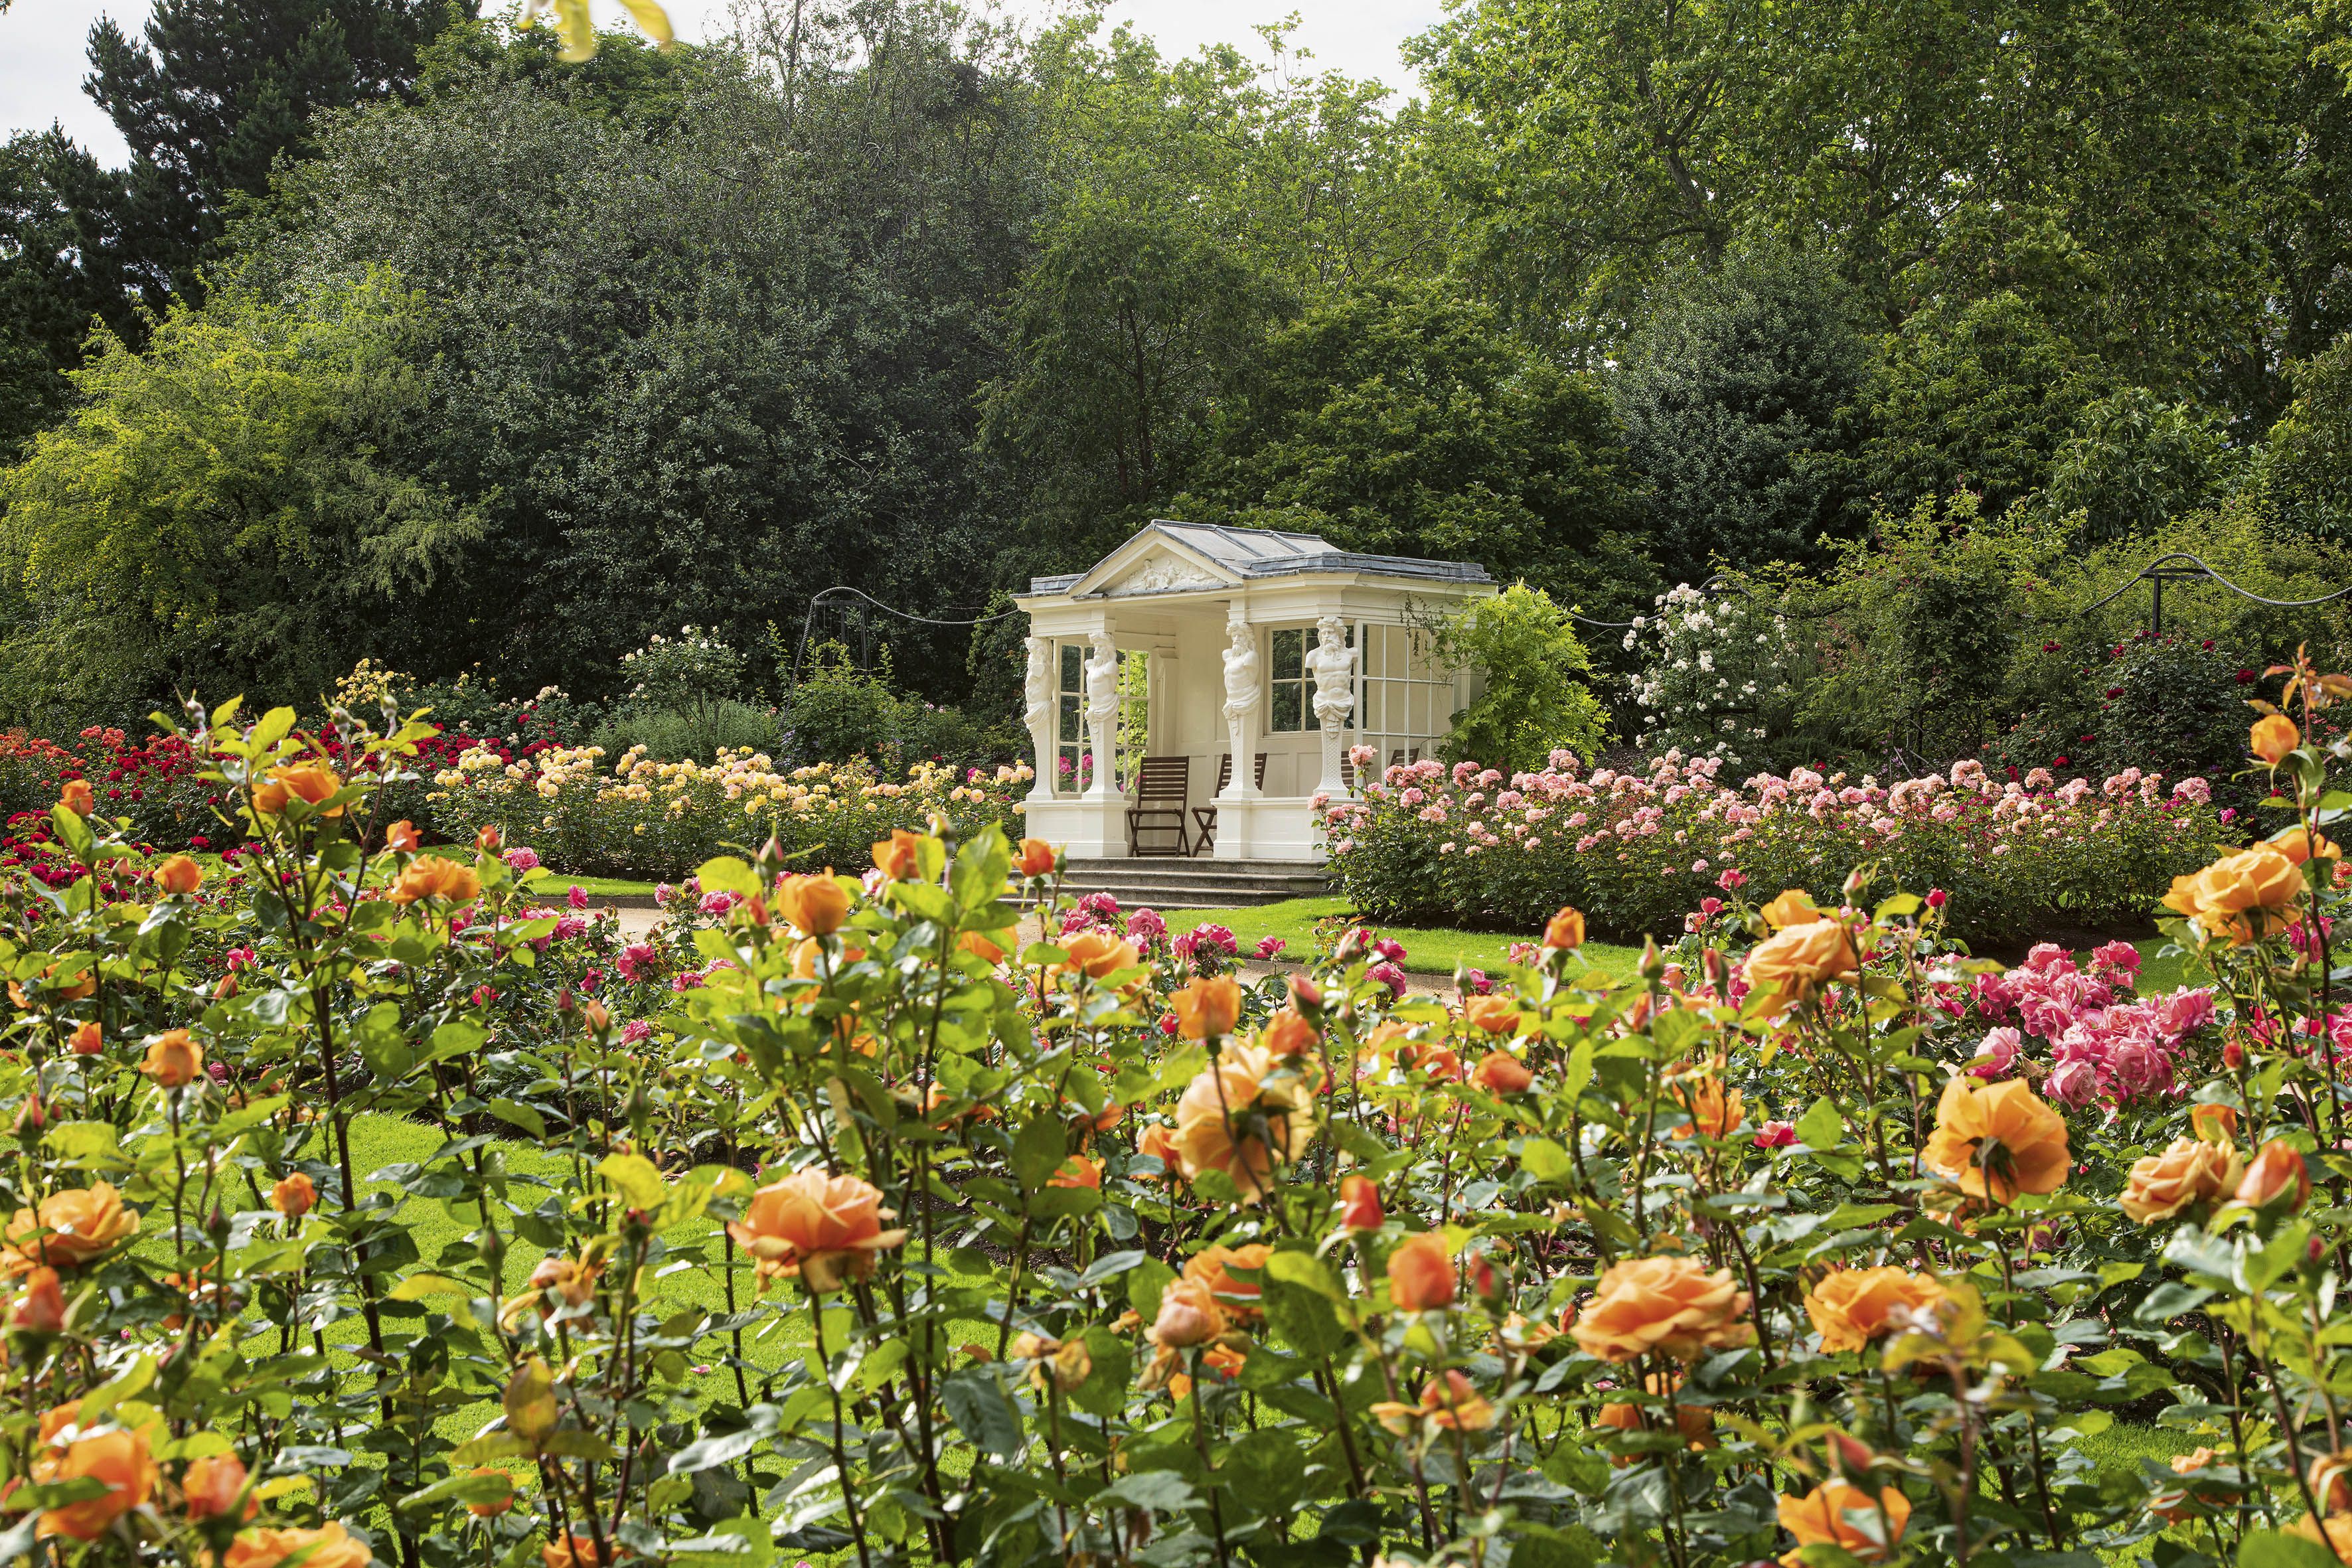 Tour Buckingham Palace's Breathtaking Gardens